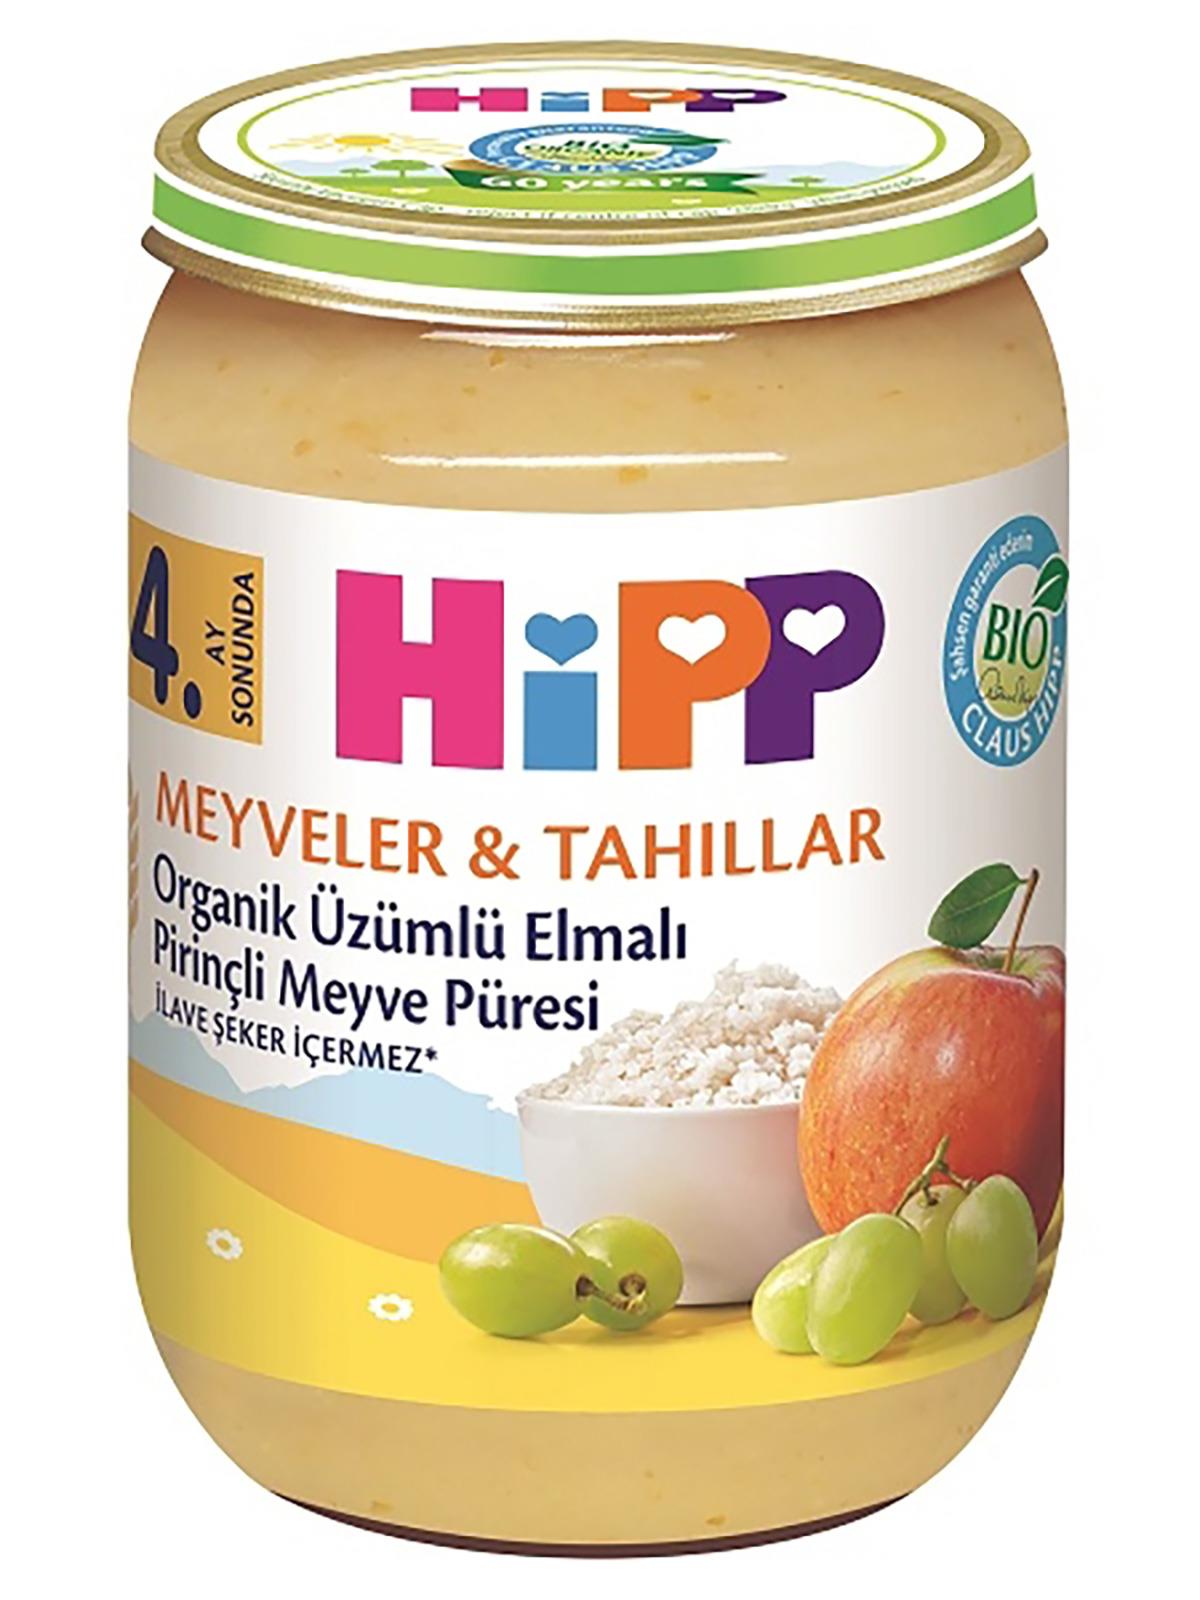 Hipp Üzümlü Elmalı Pirinçli Meyve Püresi Kavanoz Mama 190 gr +4 Ay